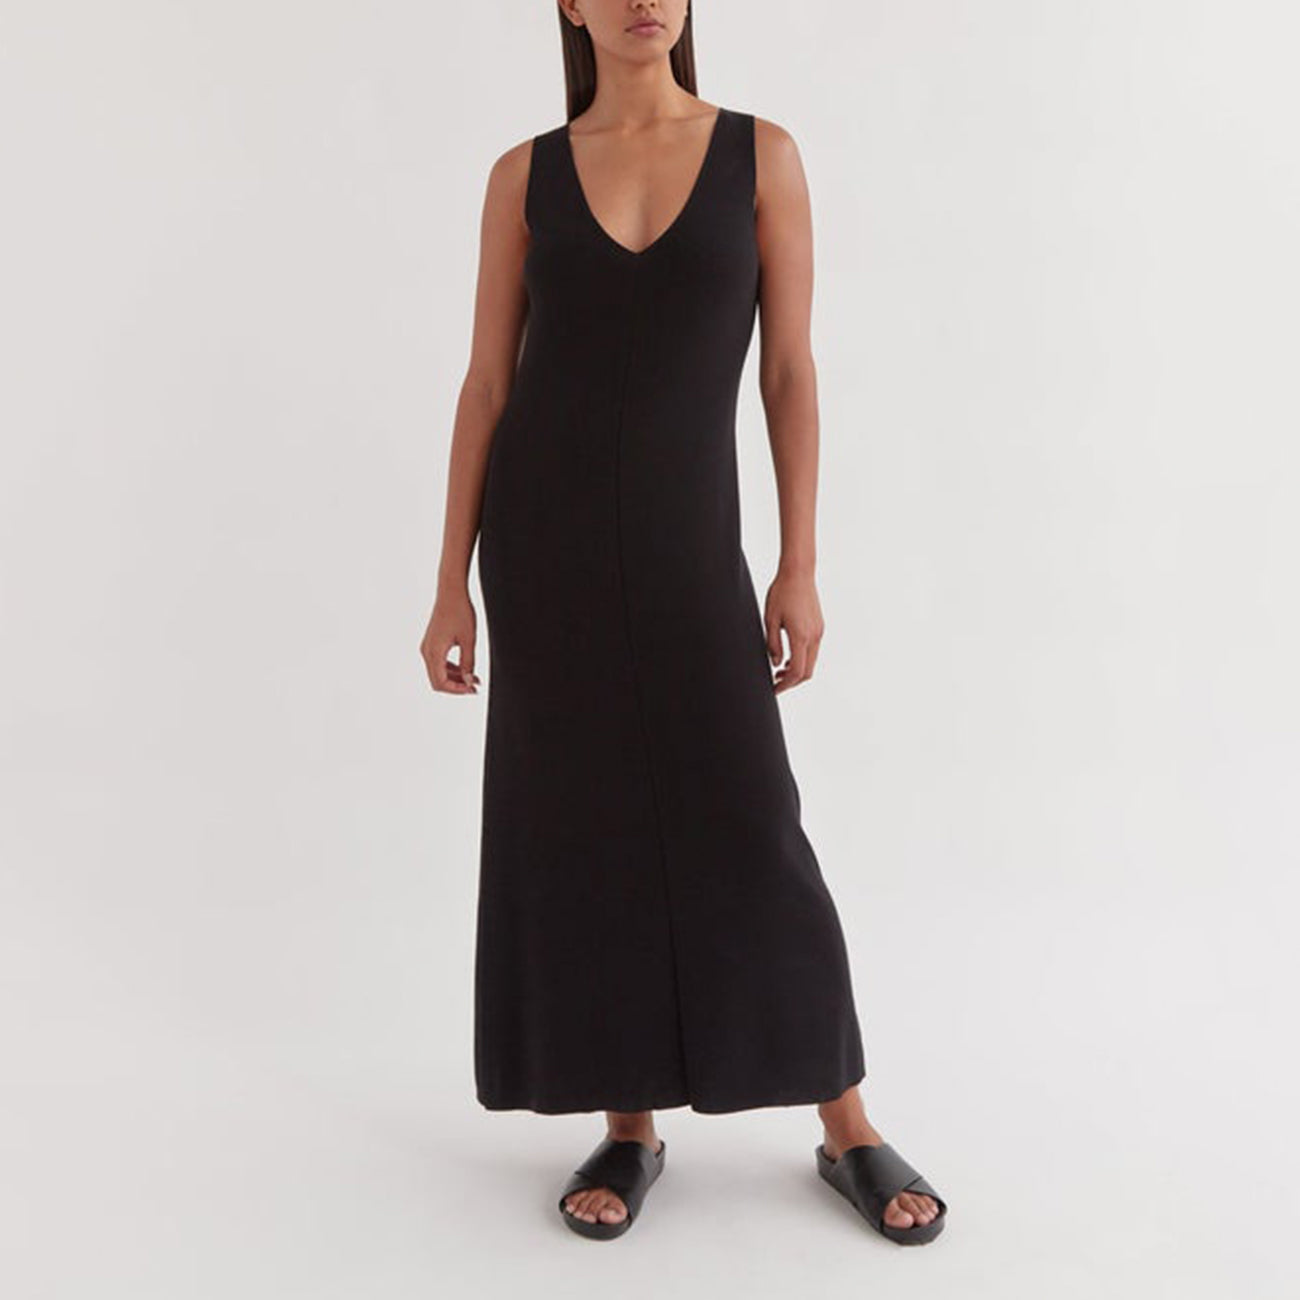 Milano Knit Vneck Dress - Black